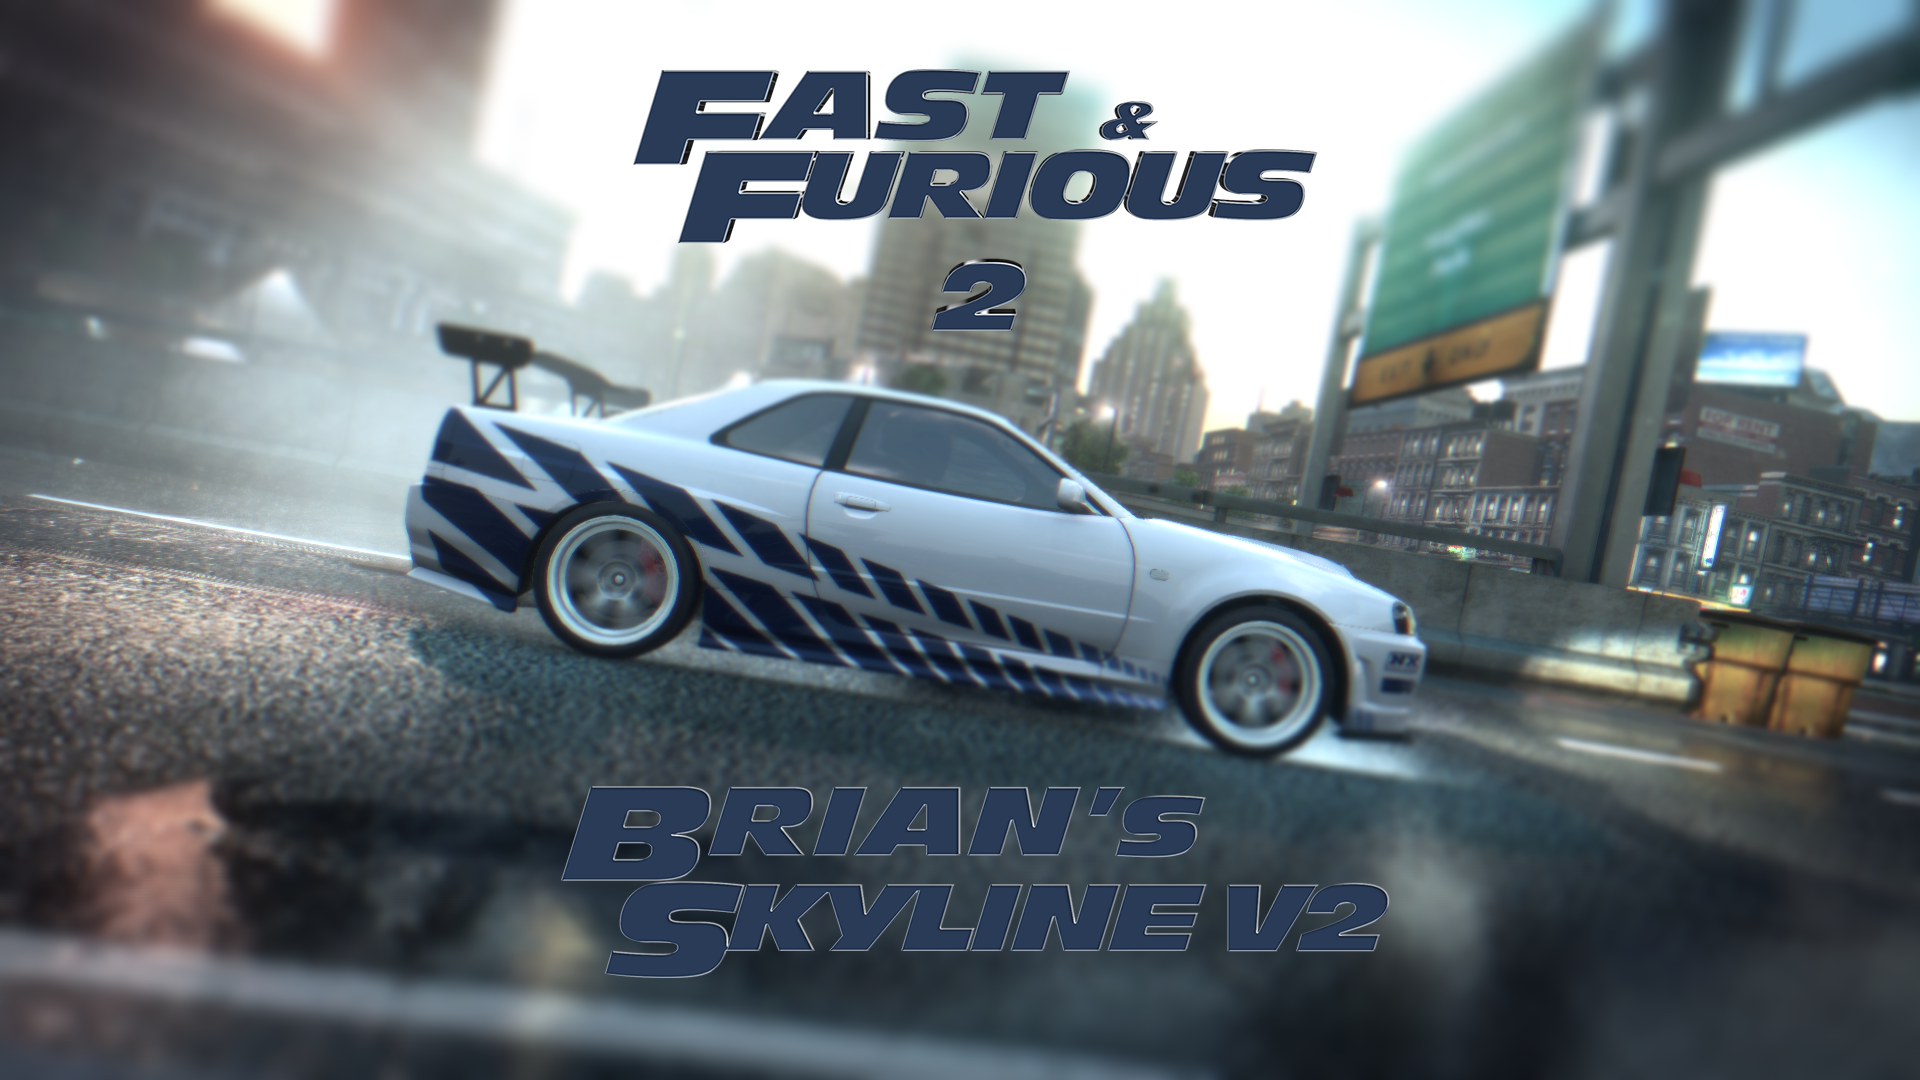 Nissan Fast & Furious 2 Skyline